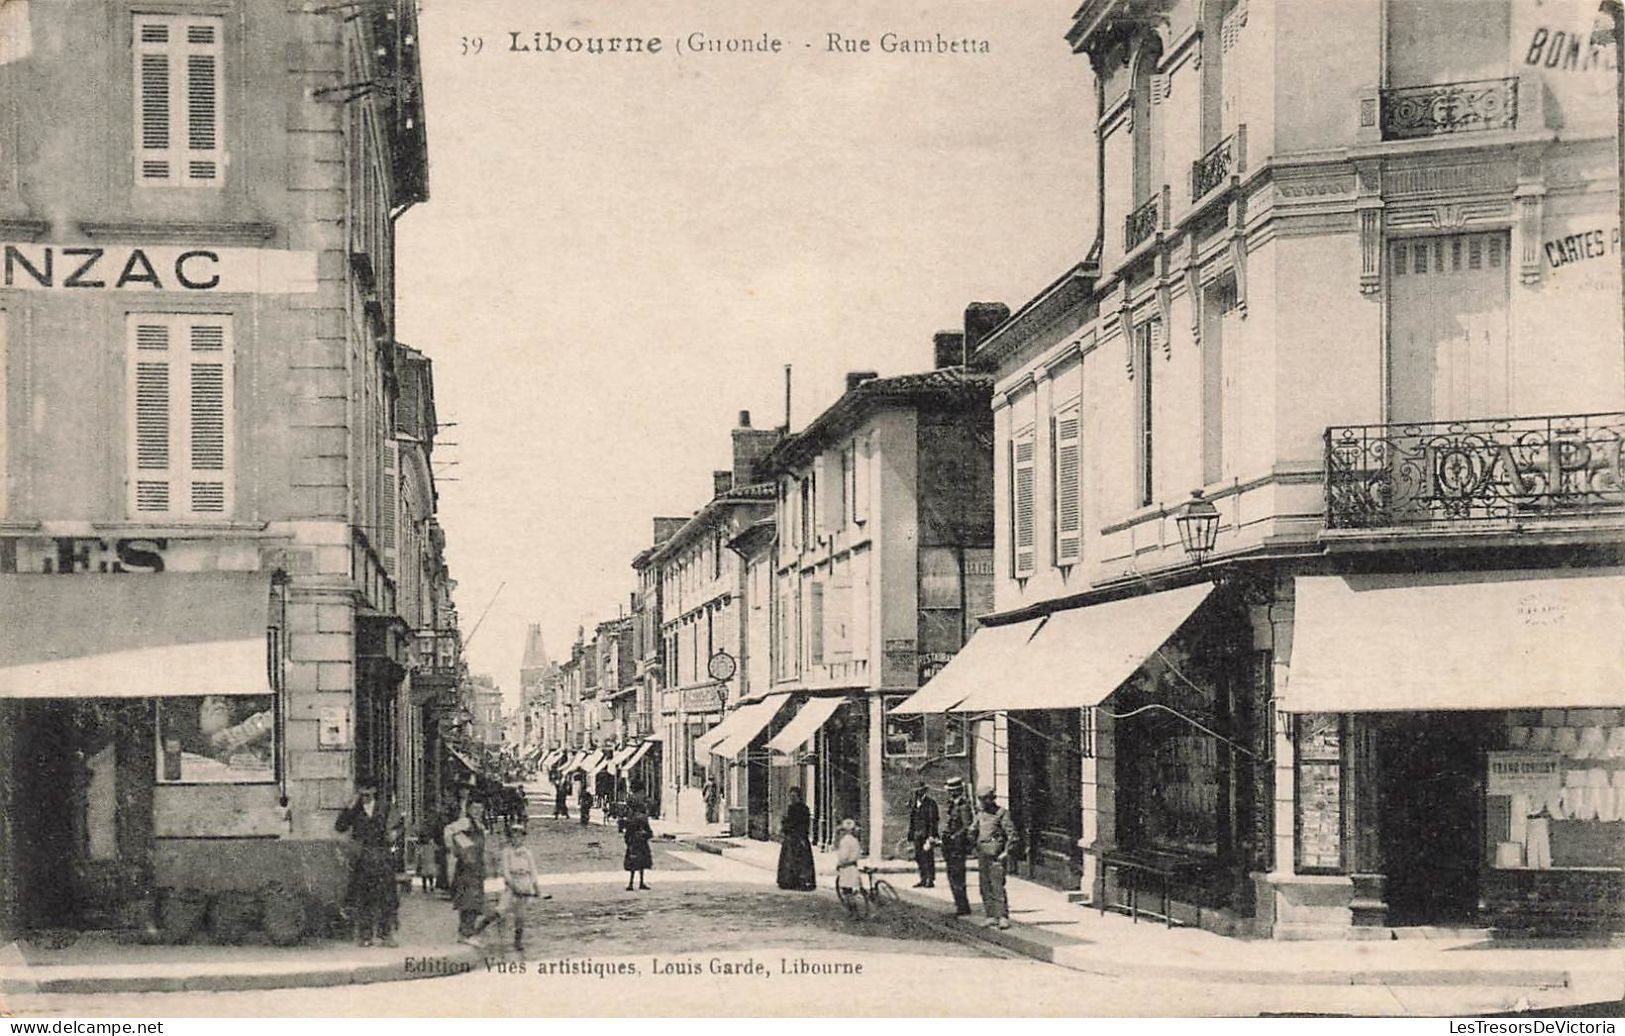 FRANCE - Libourne (Gironde) - Rue Gambetta - Animé - Carte Postale Ancienne - Libourne